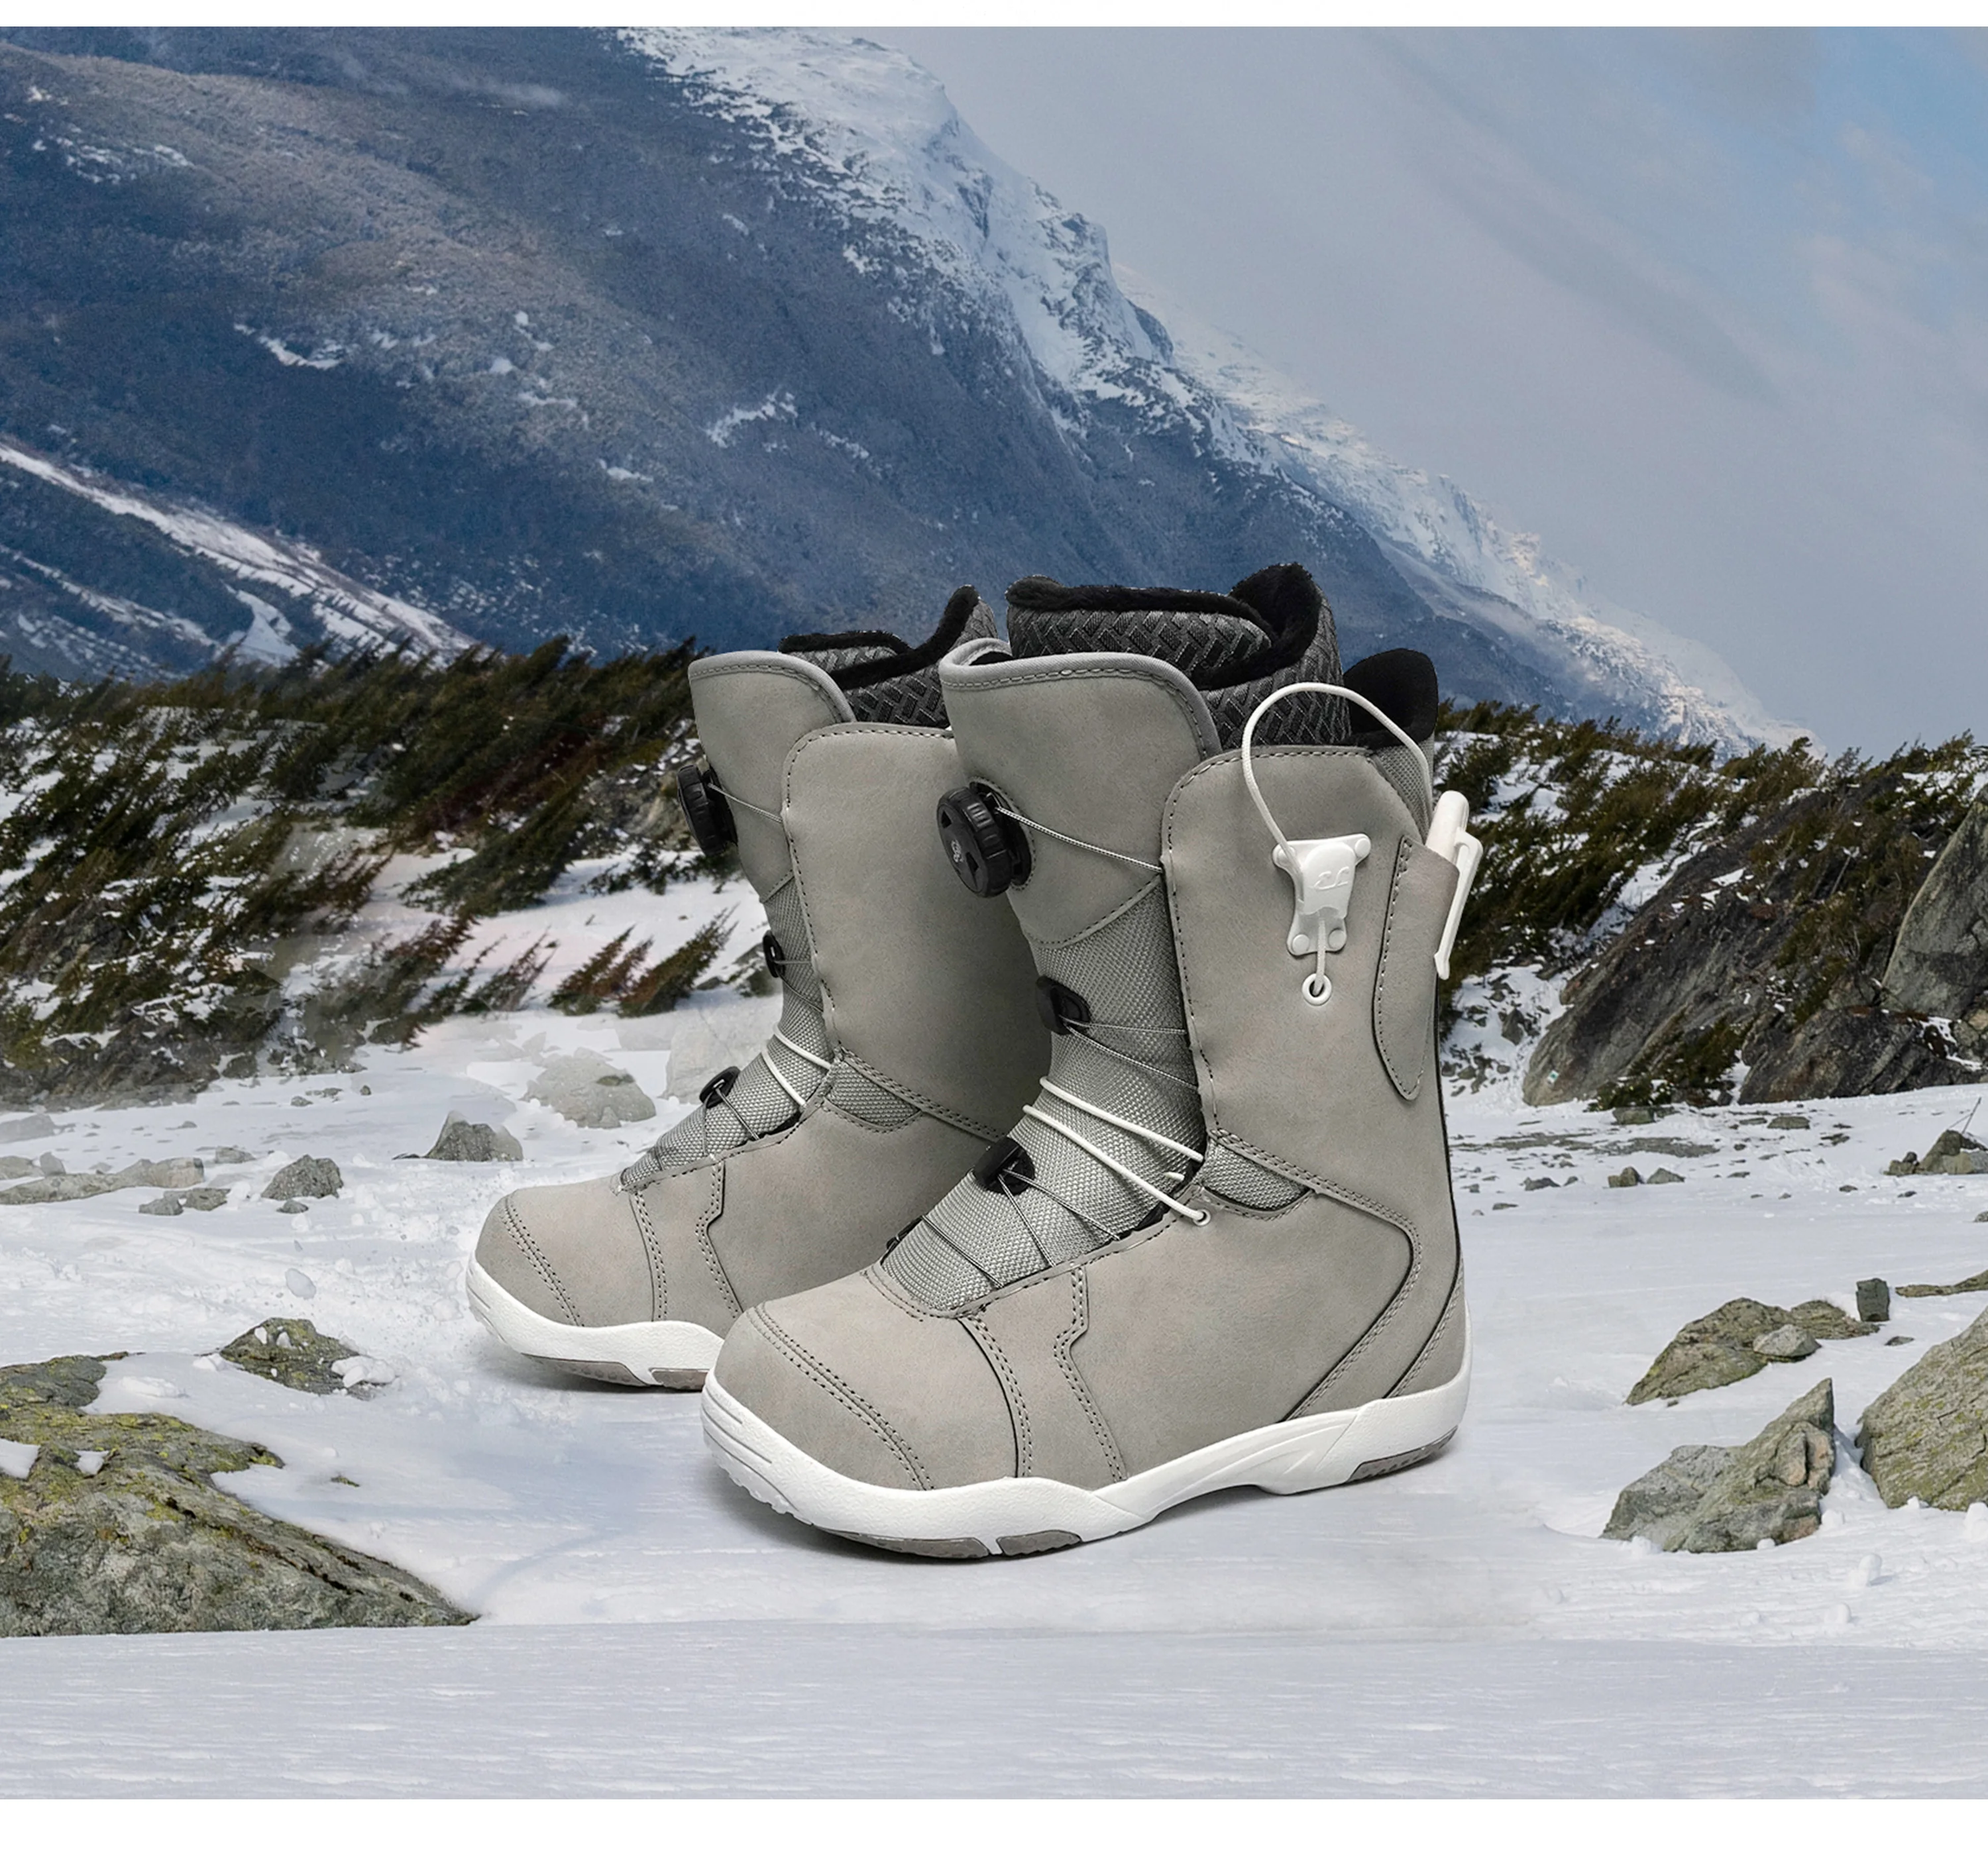 Wholesales הקמעונאי באיכות גבוהה סנובורד מחייב מגפי שלג נעלי סנובורד מגפי גבר - 5